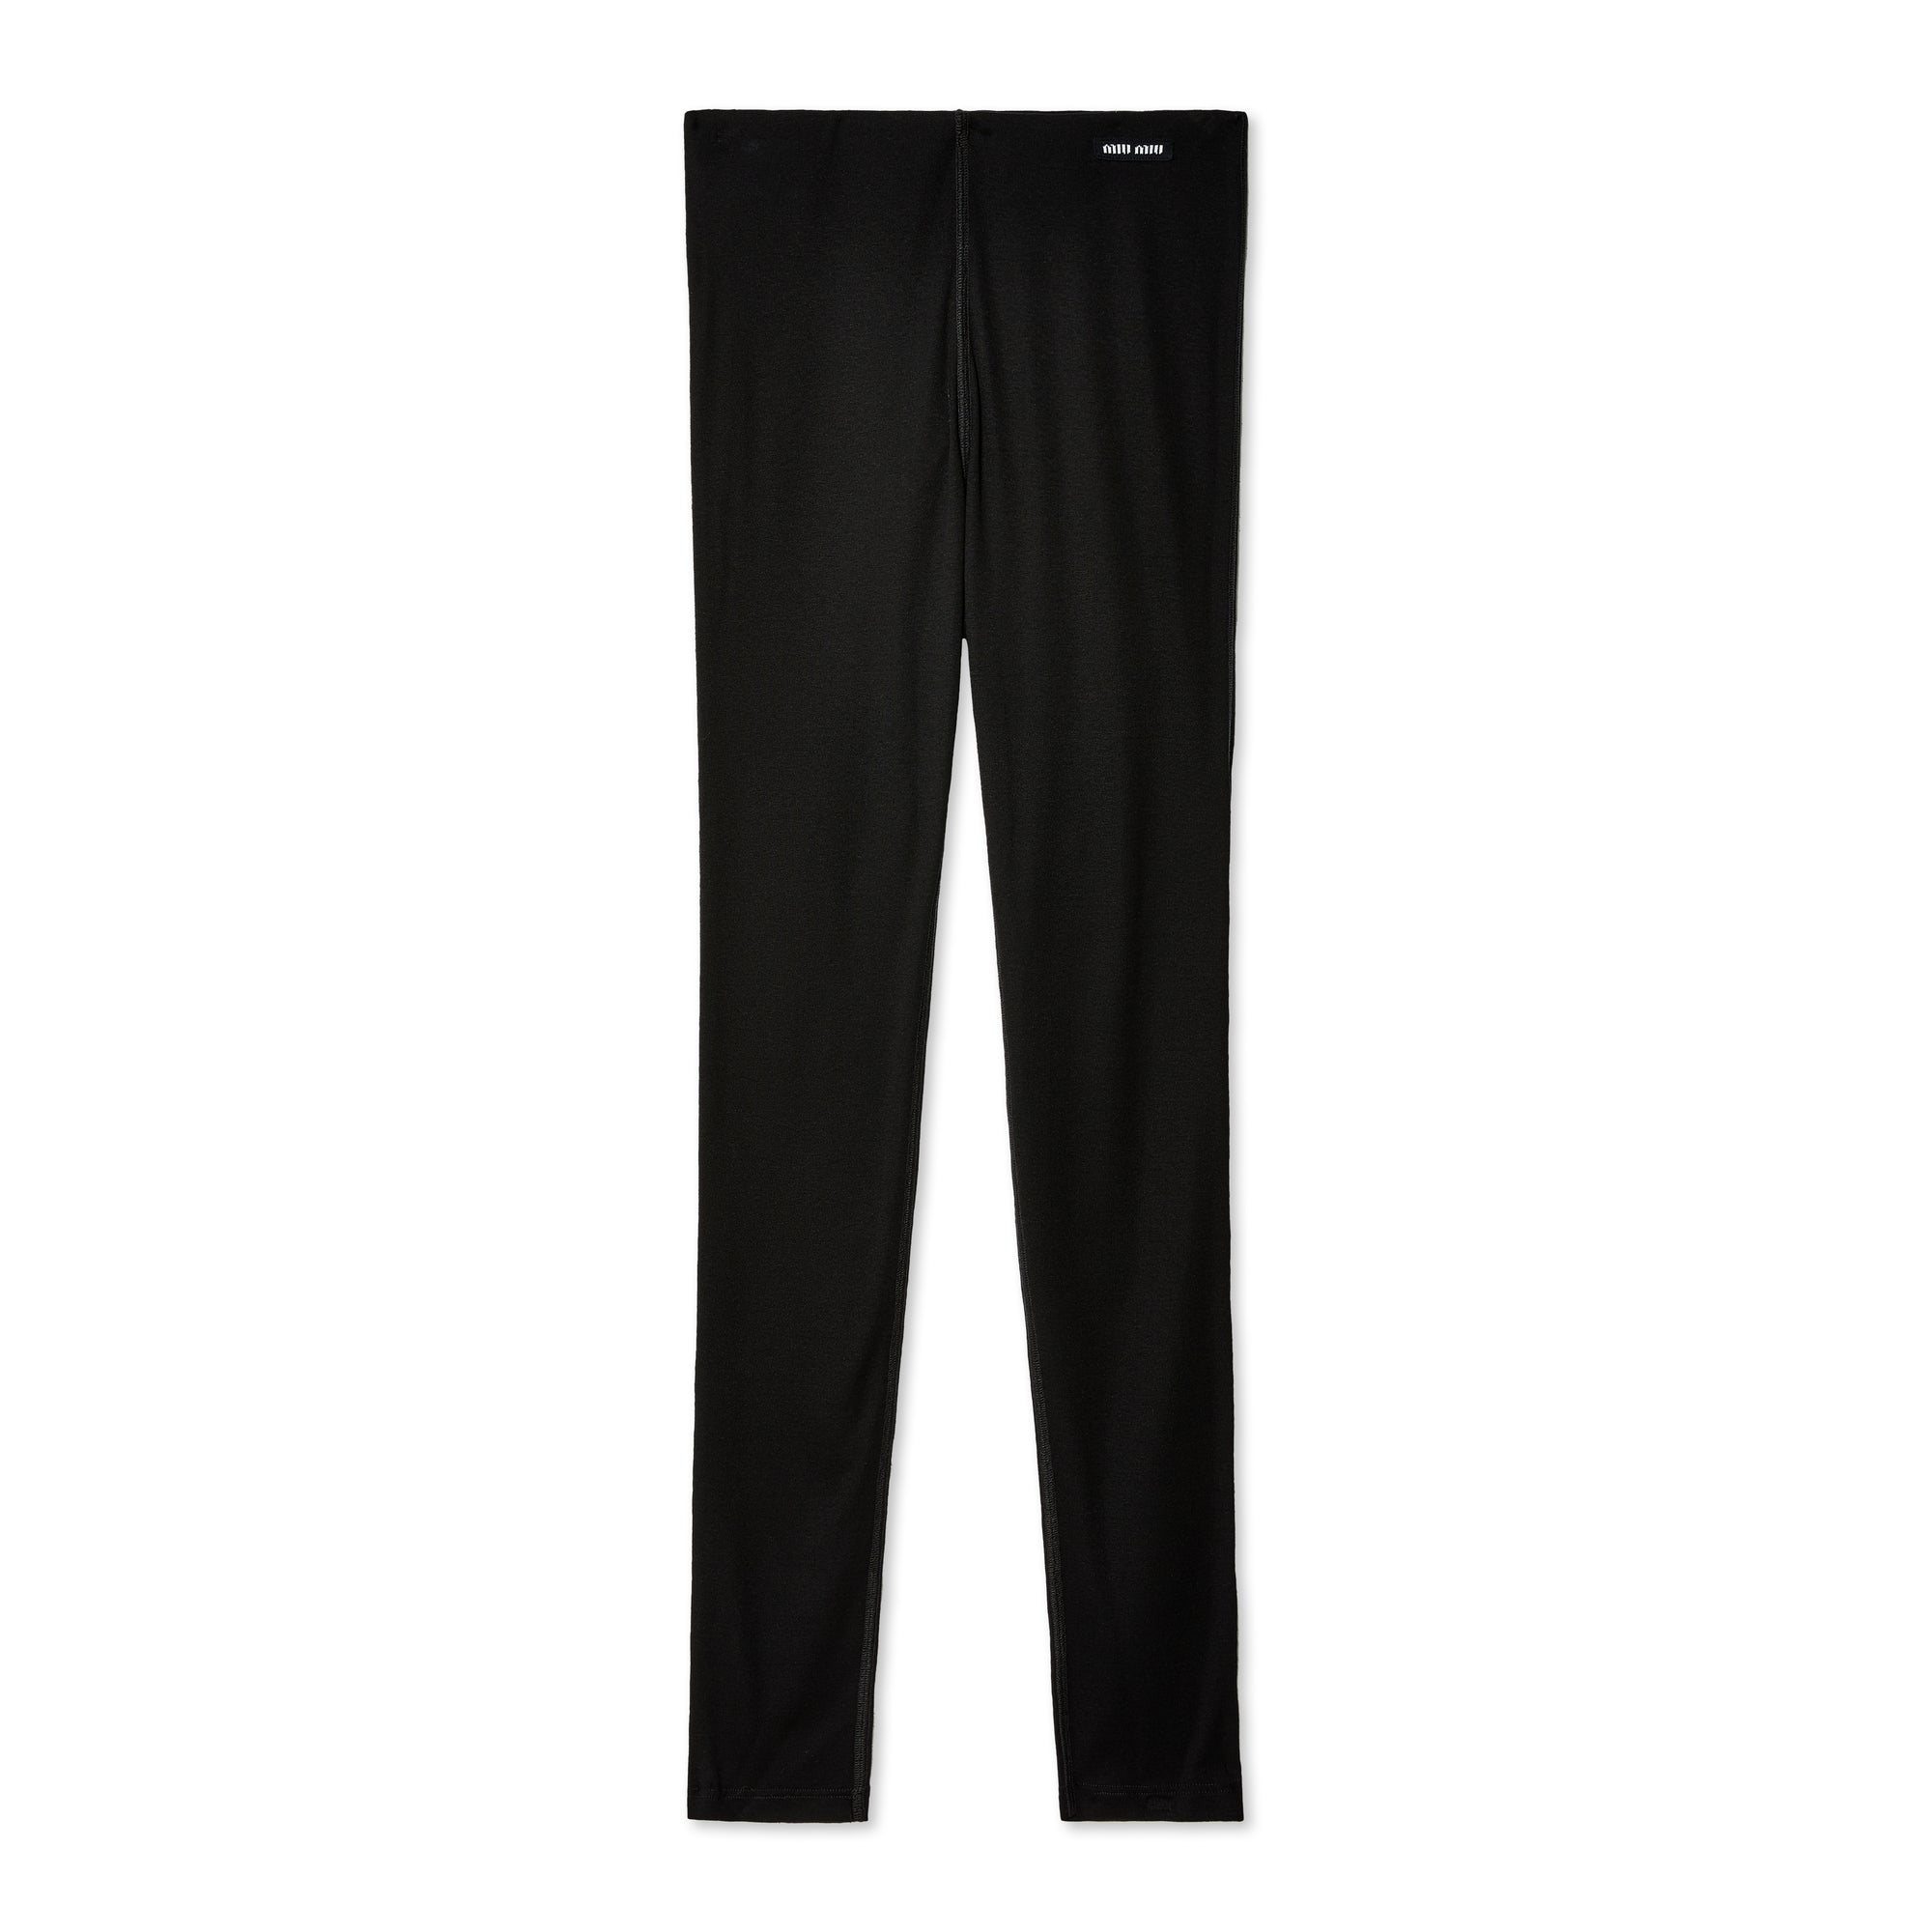 Miu Miu - Women's Silk Jersey Pants - (Black) view 1